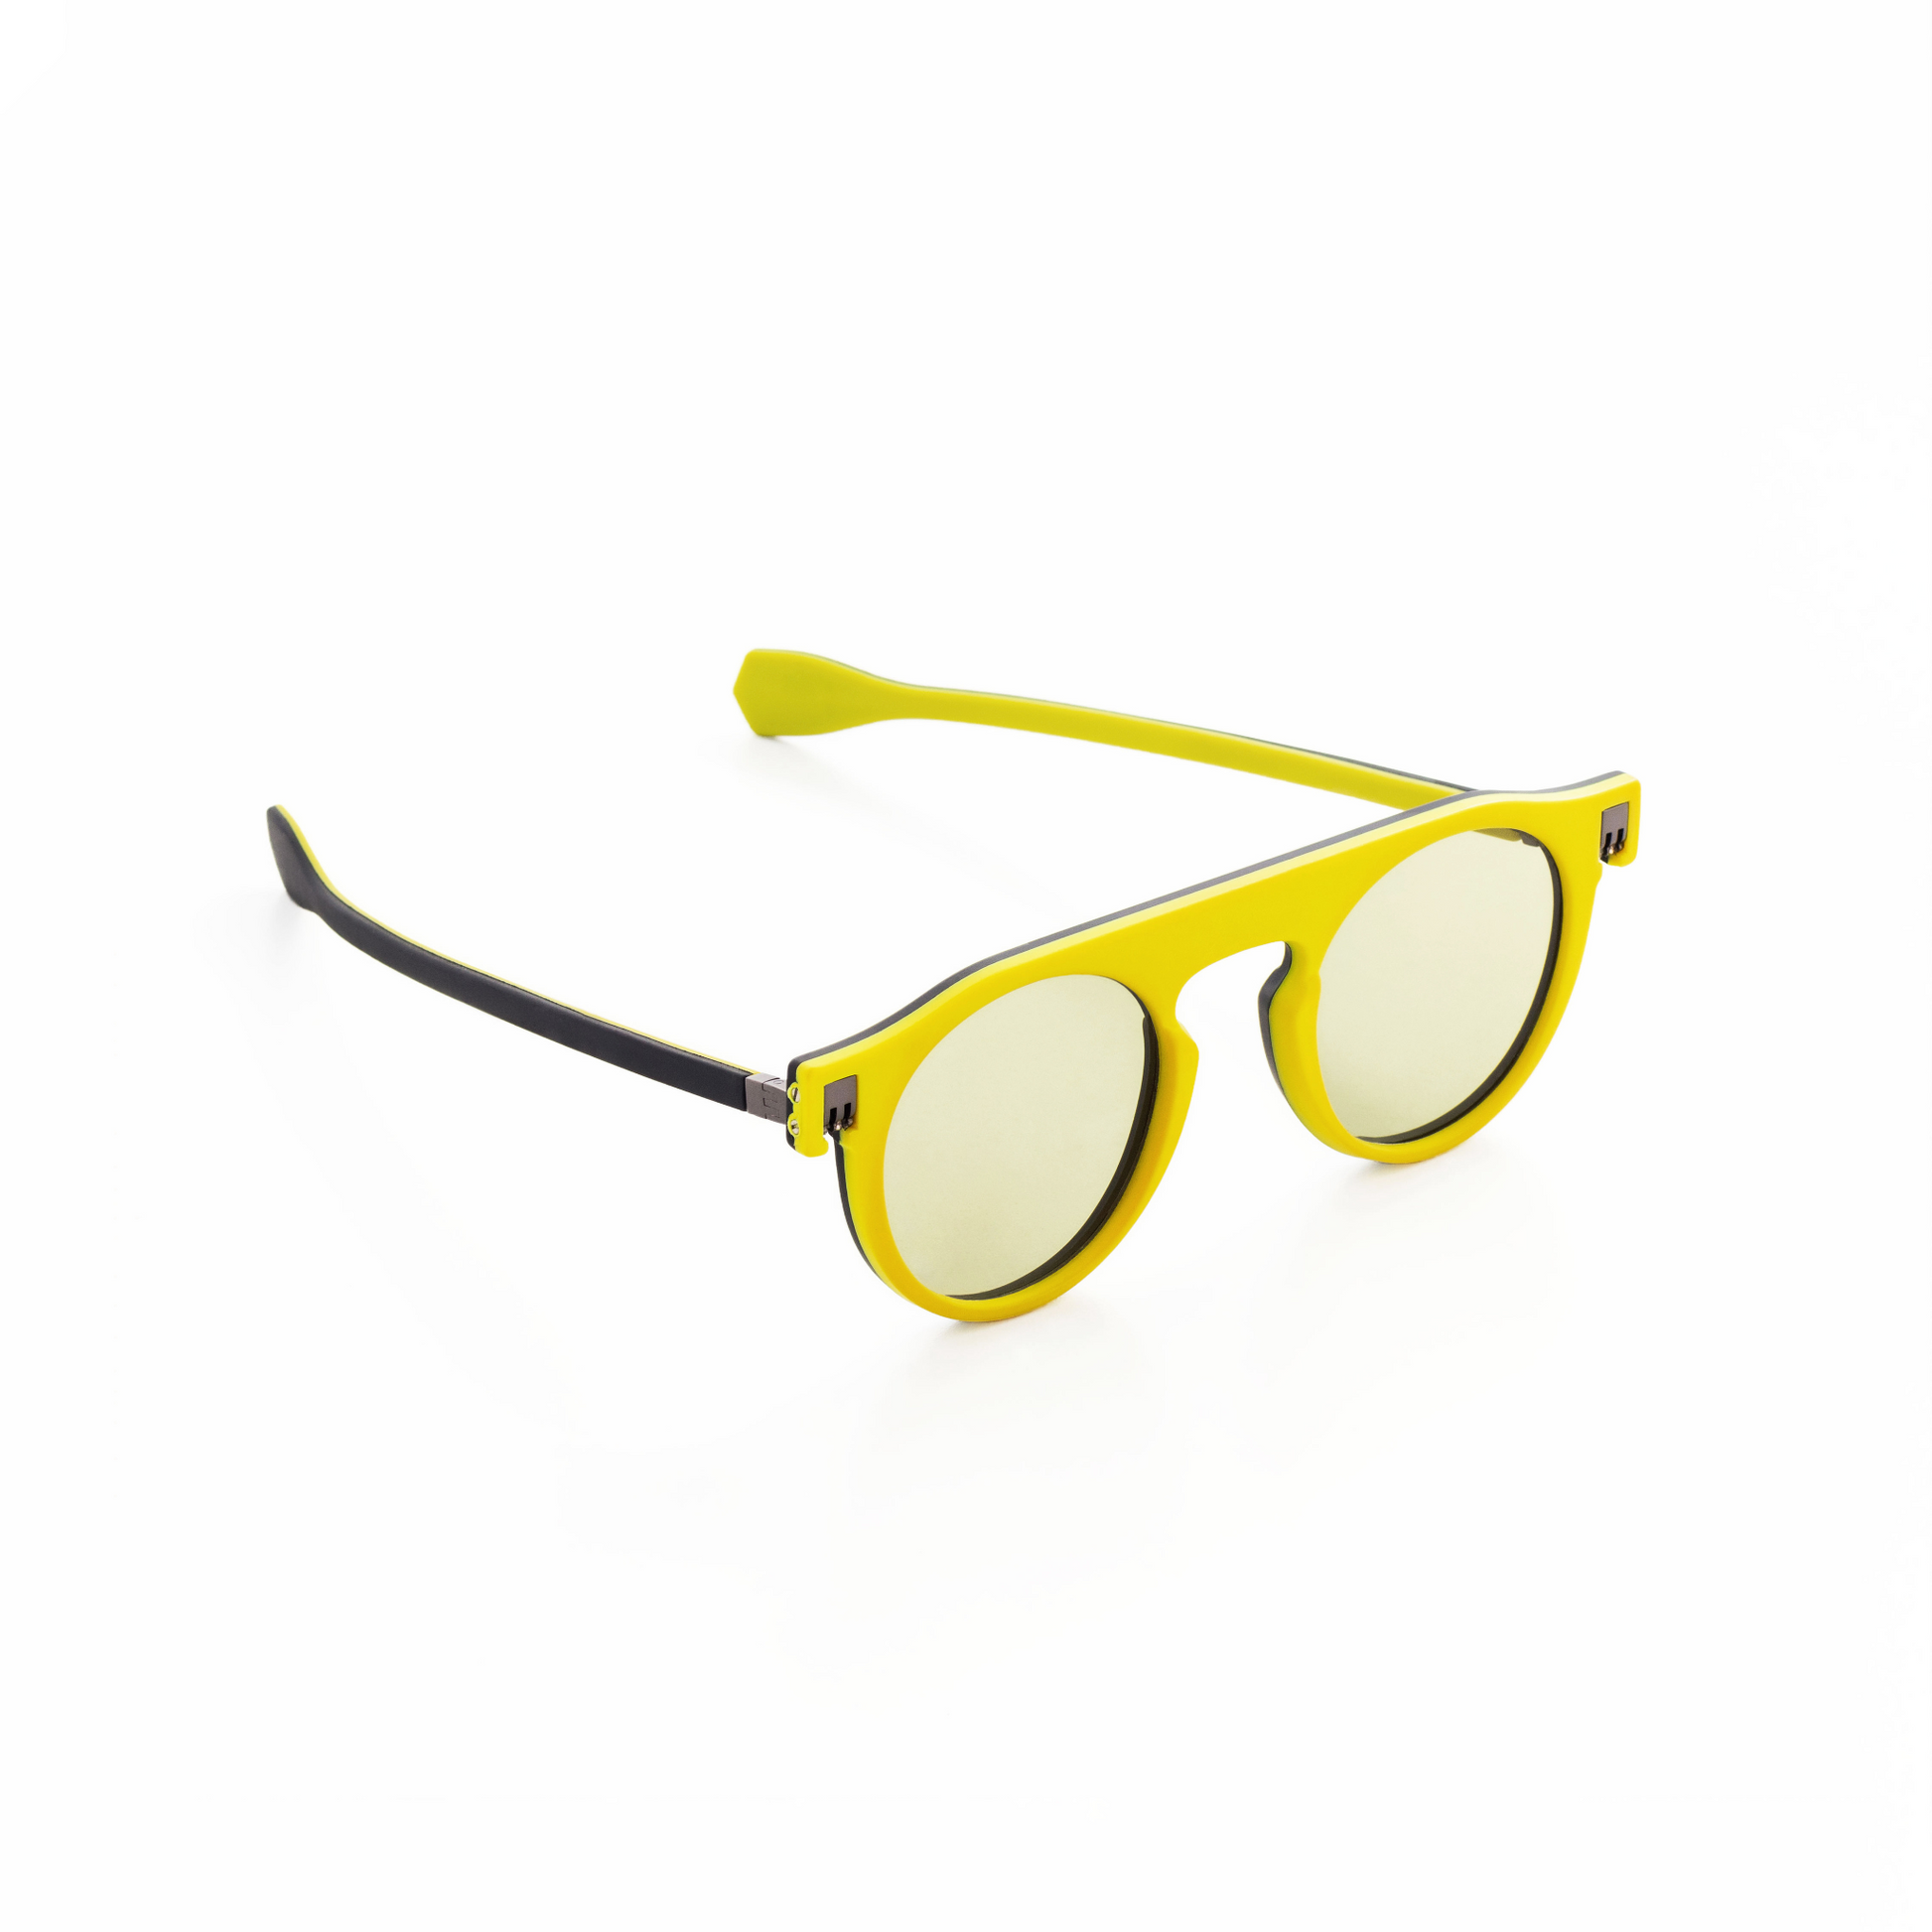 Reverso sunglasses black & yellow reversible & ultra light side view 1